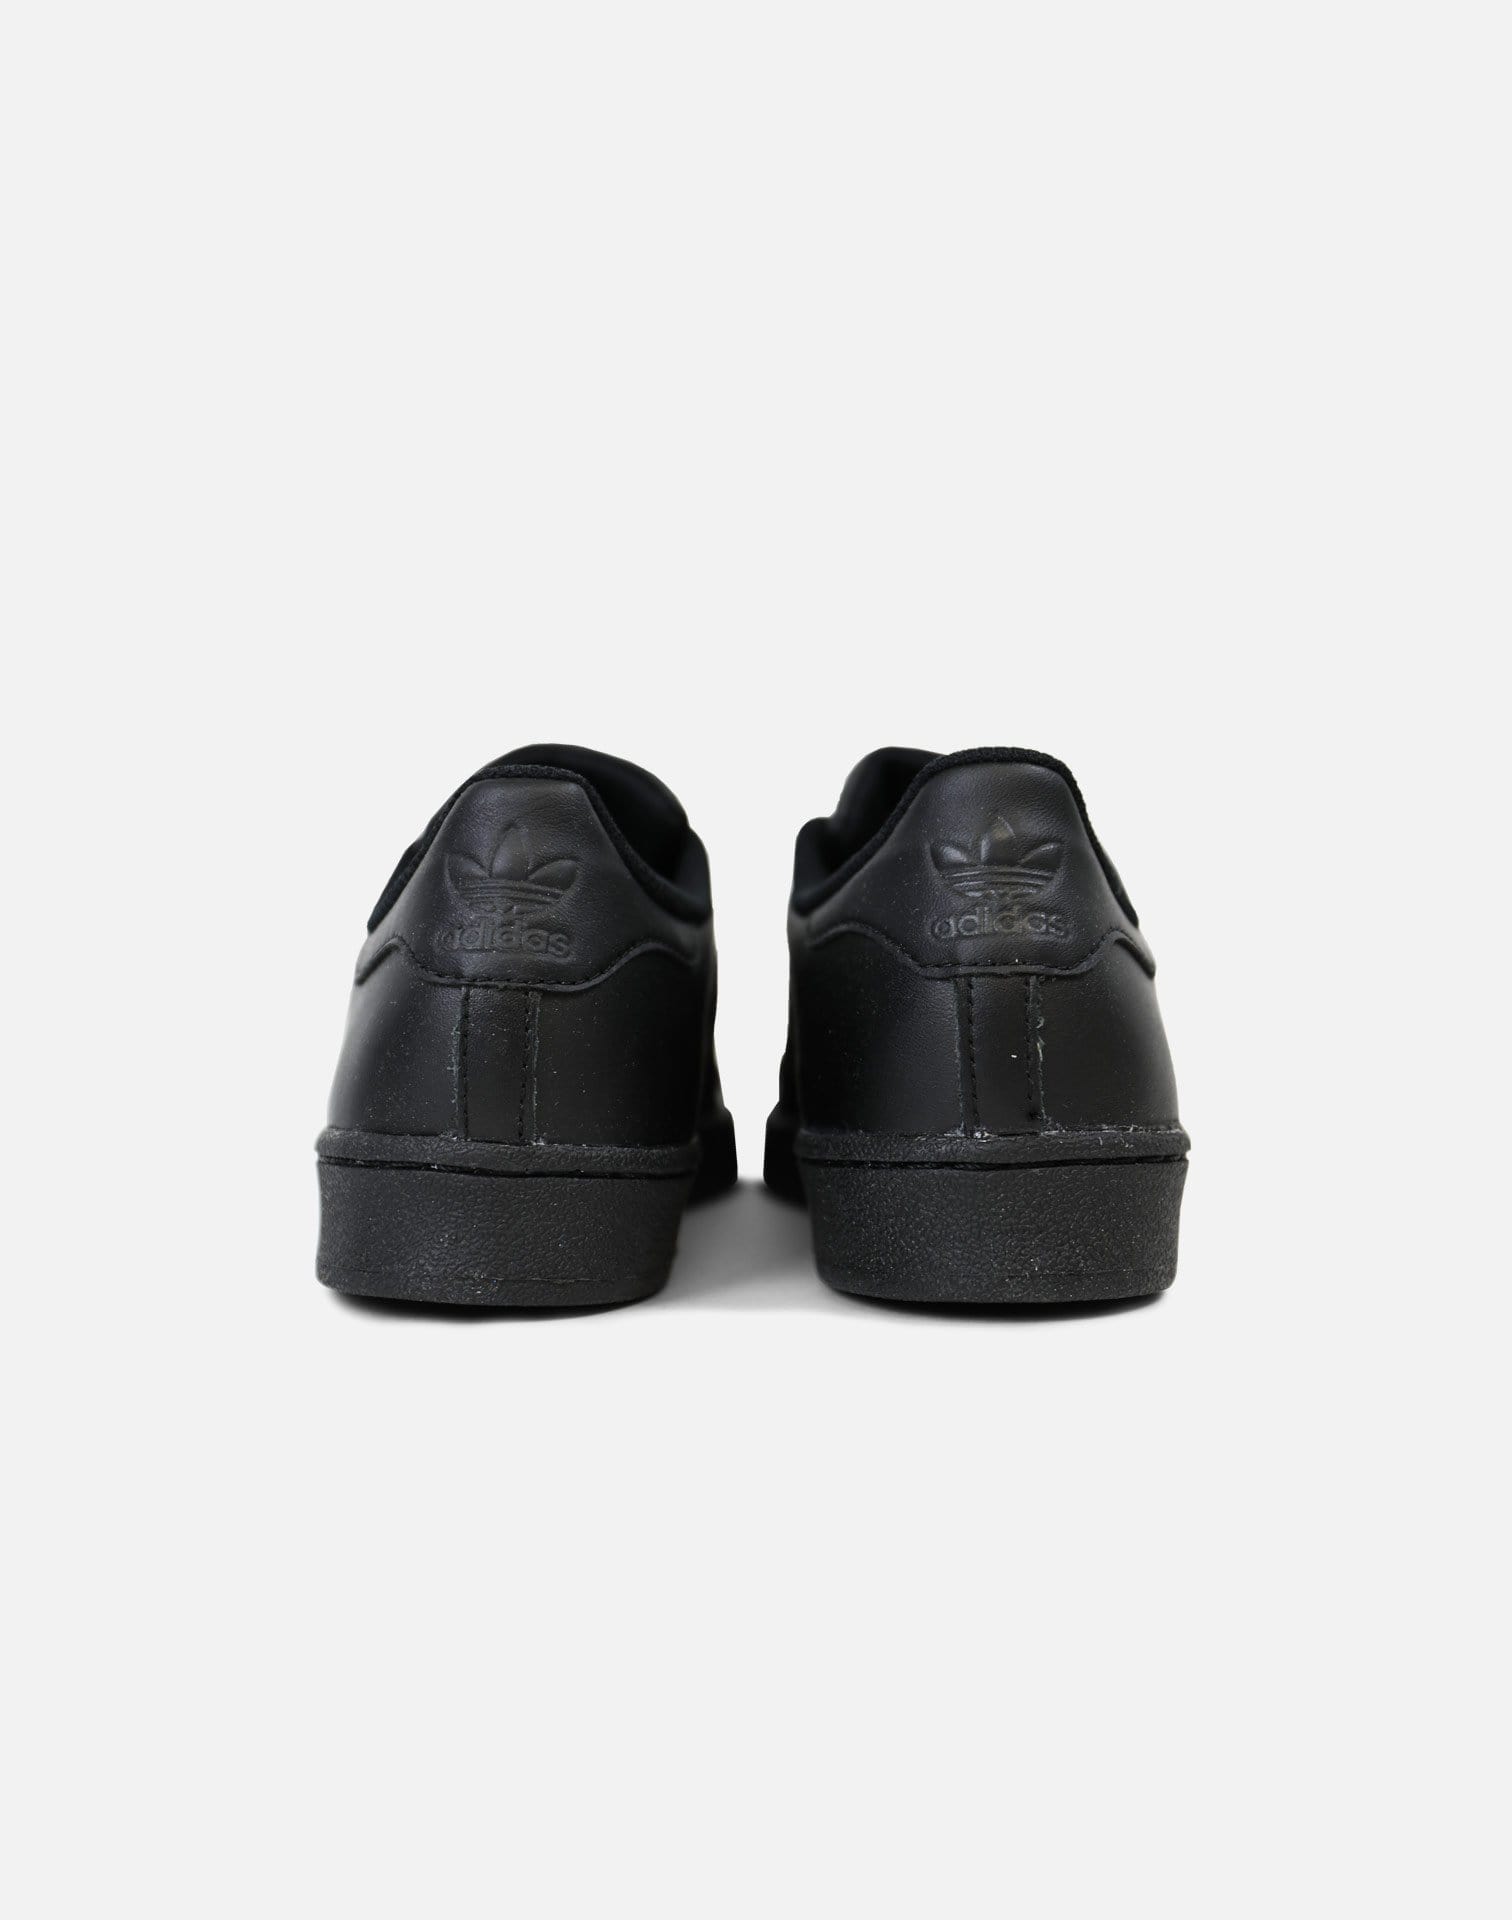 adidas Superstar Pre-School (Black/Black-Black)